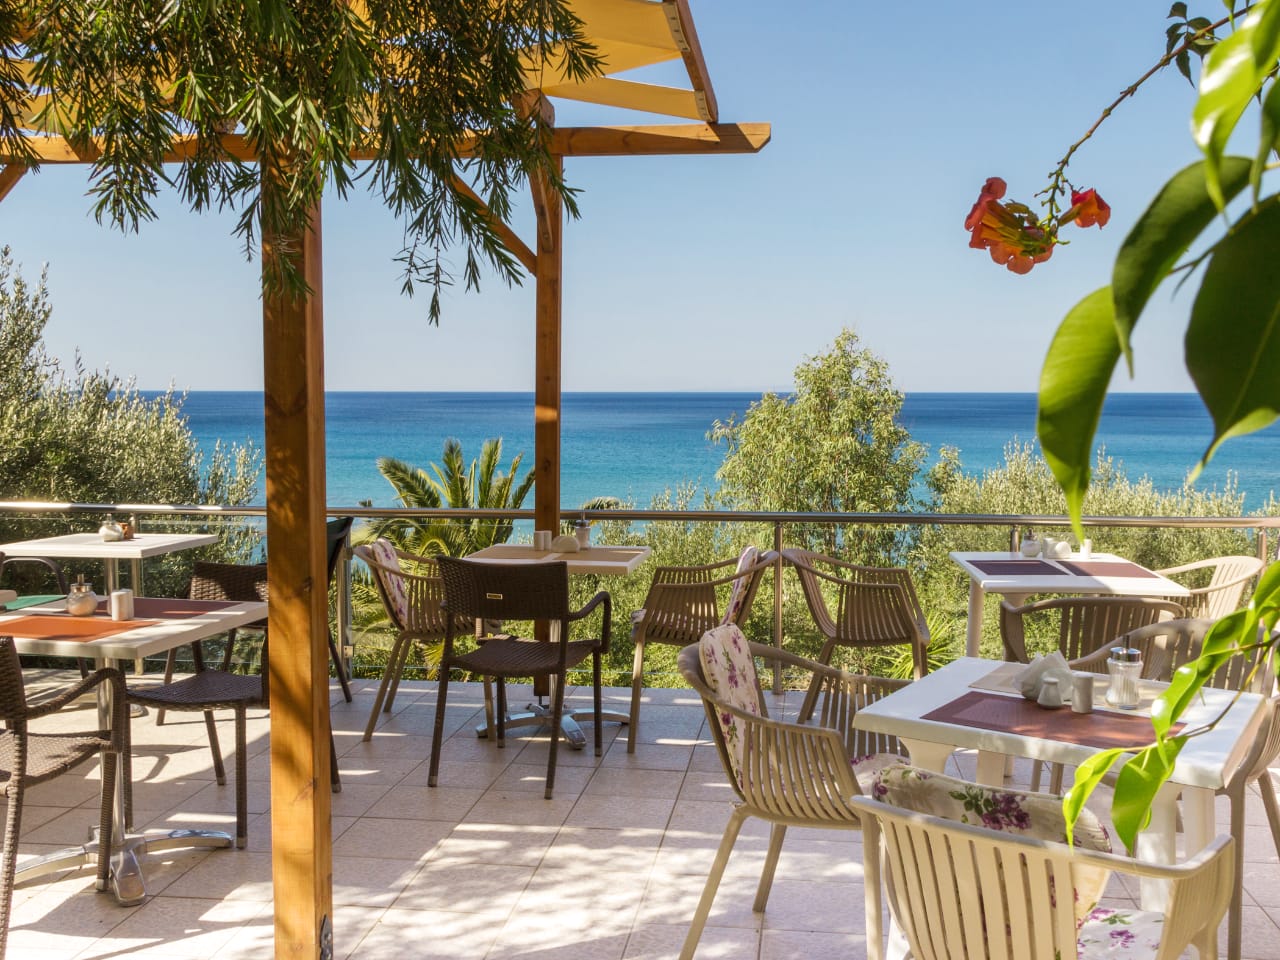 Horizon Beach Hotel - Plakias in South Rethimno ... sea views to die